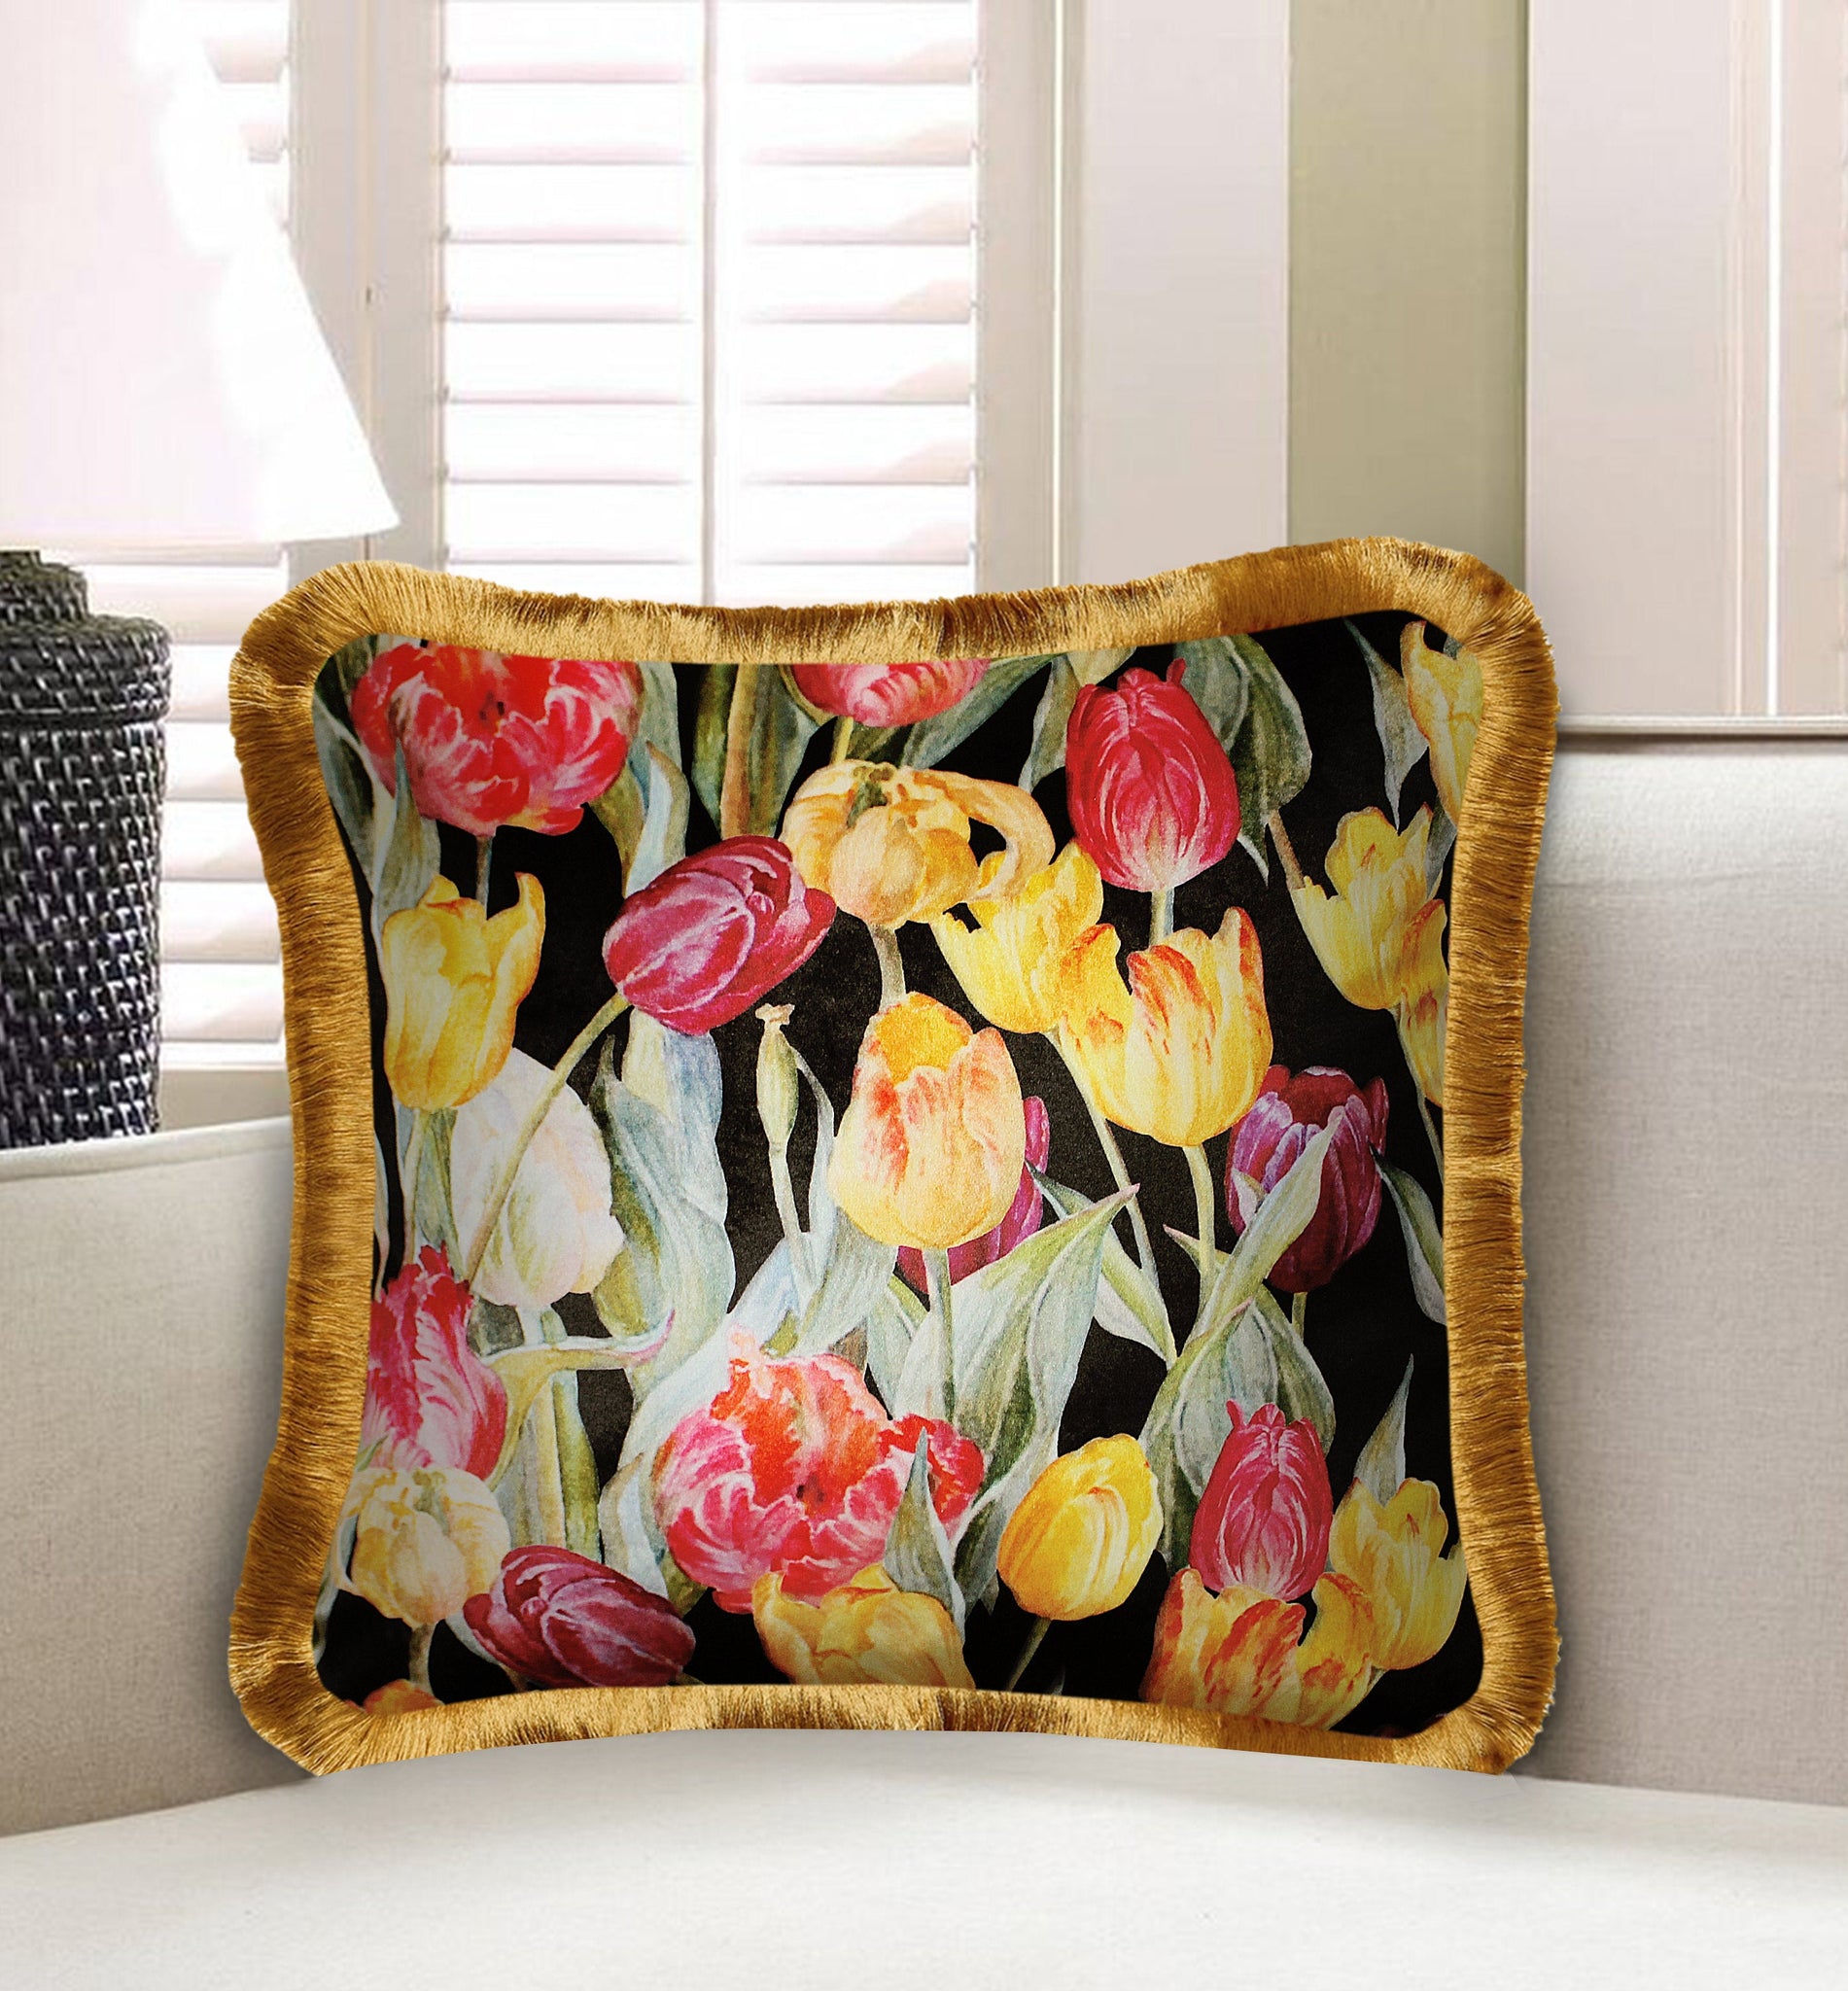  Velvet Cushion Cover Home Decor Floral Decorative pillowcase Tulip Décor Throw Pillow for Sofa Chair Bedroom Living Room Multi Color 45x45cm (18x18 Inches)